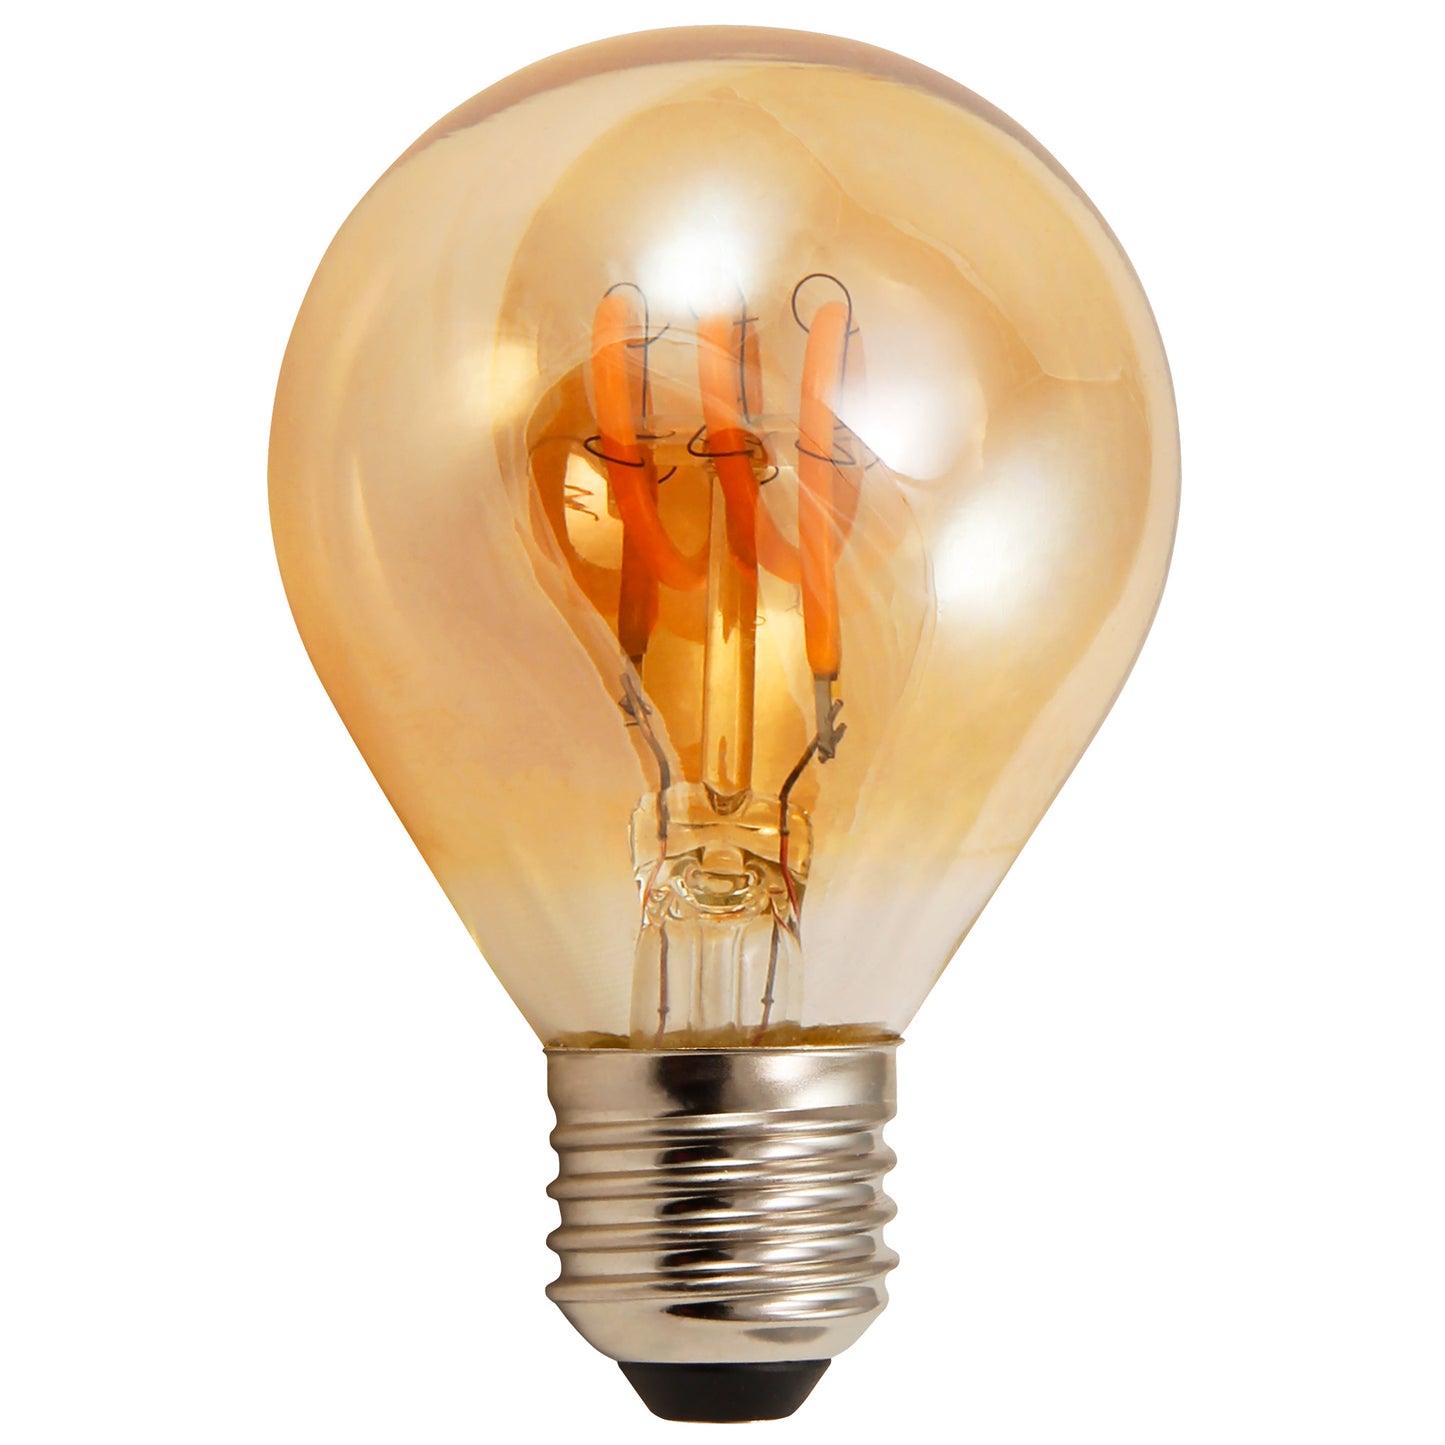 5x Retro LED Filament Glühbirne E27 2W Vintage Lampe Gold Glas Warmweiß 150lm